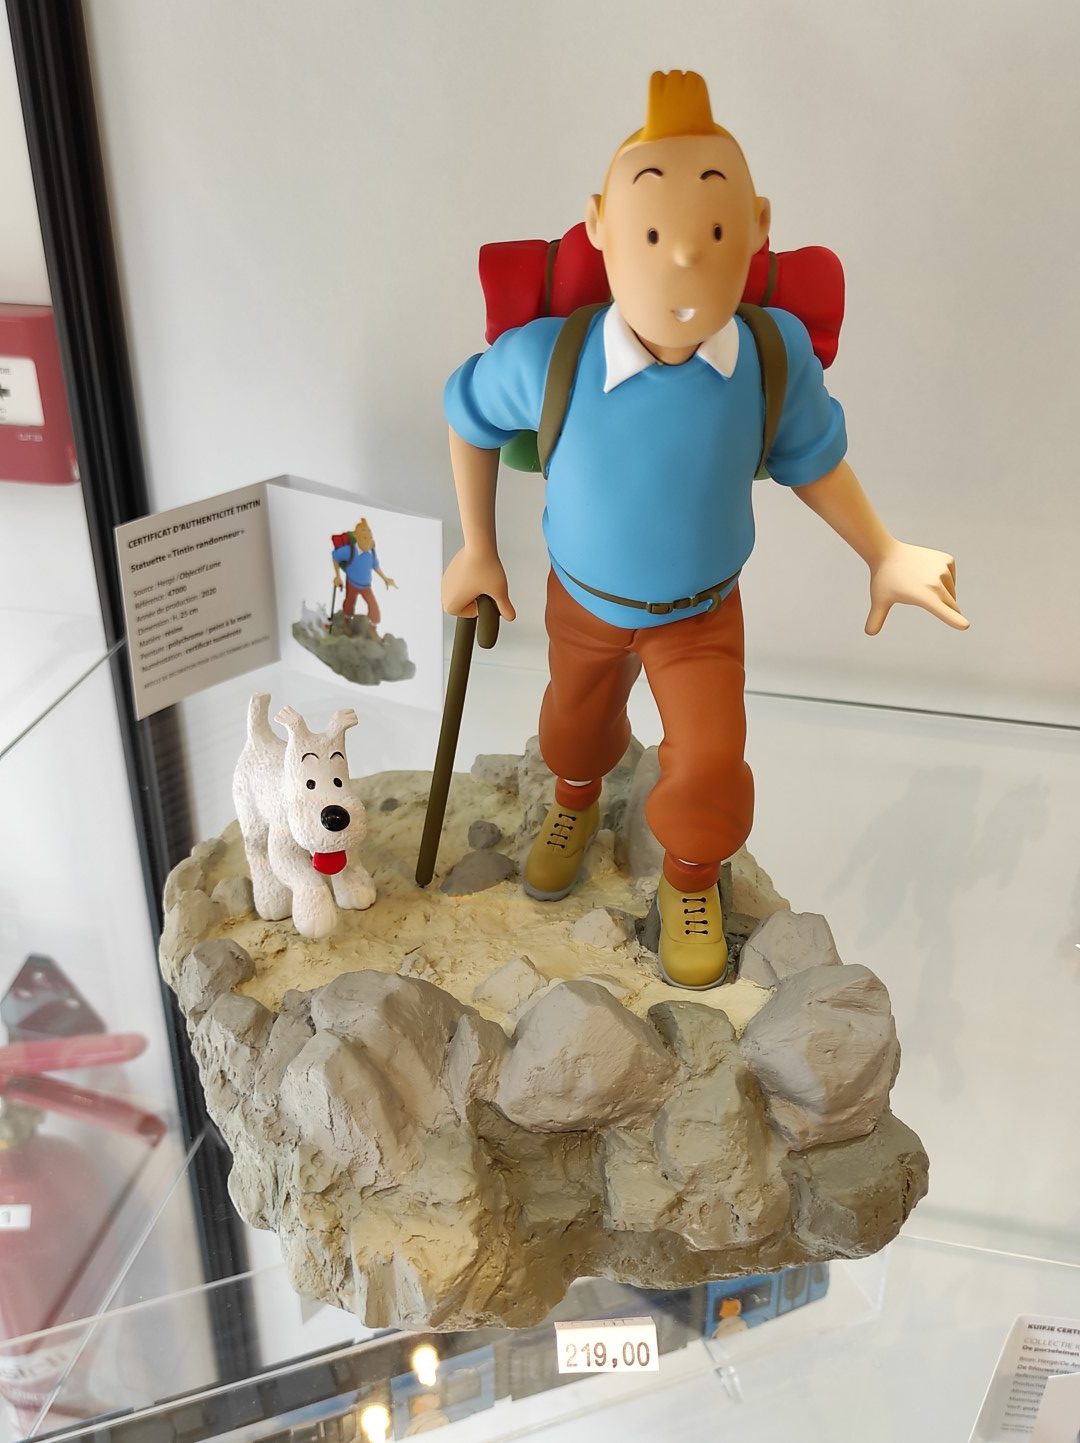 Tintin Randonneur